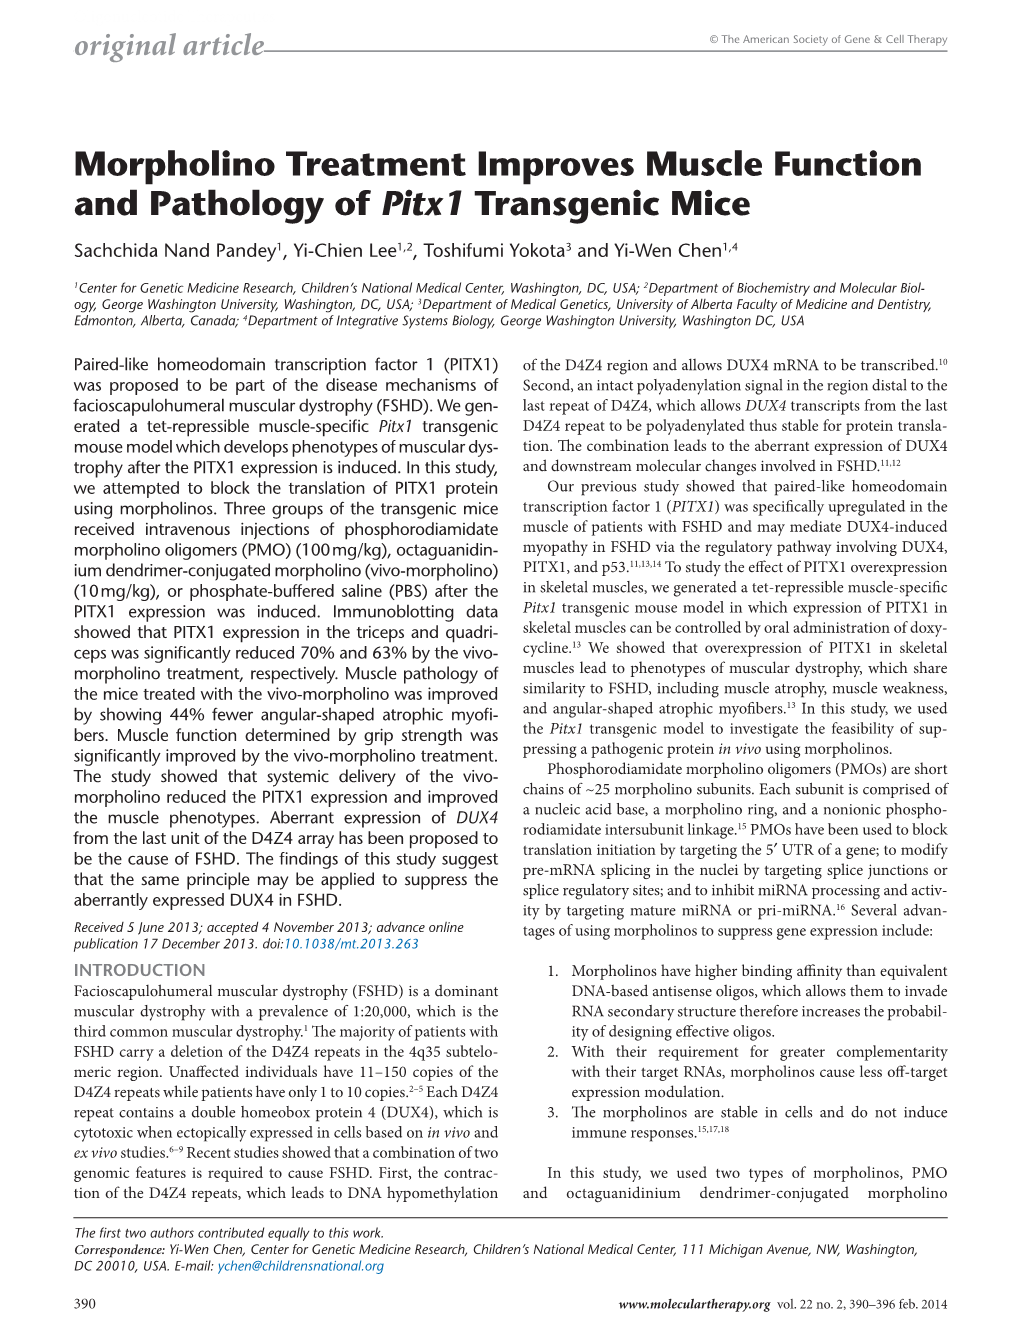 Morpholino Treatment Improves Muscle Function and Pathology of Pitx1 Transgenic Mice